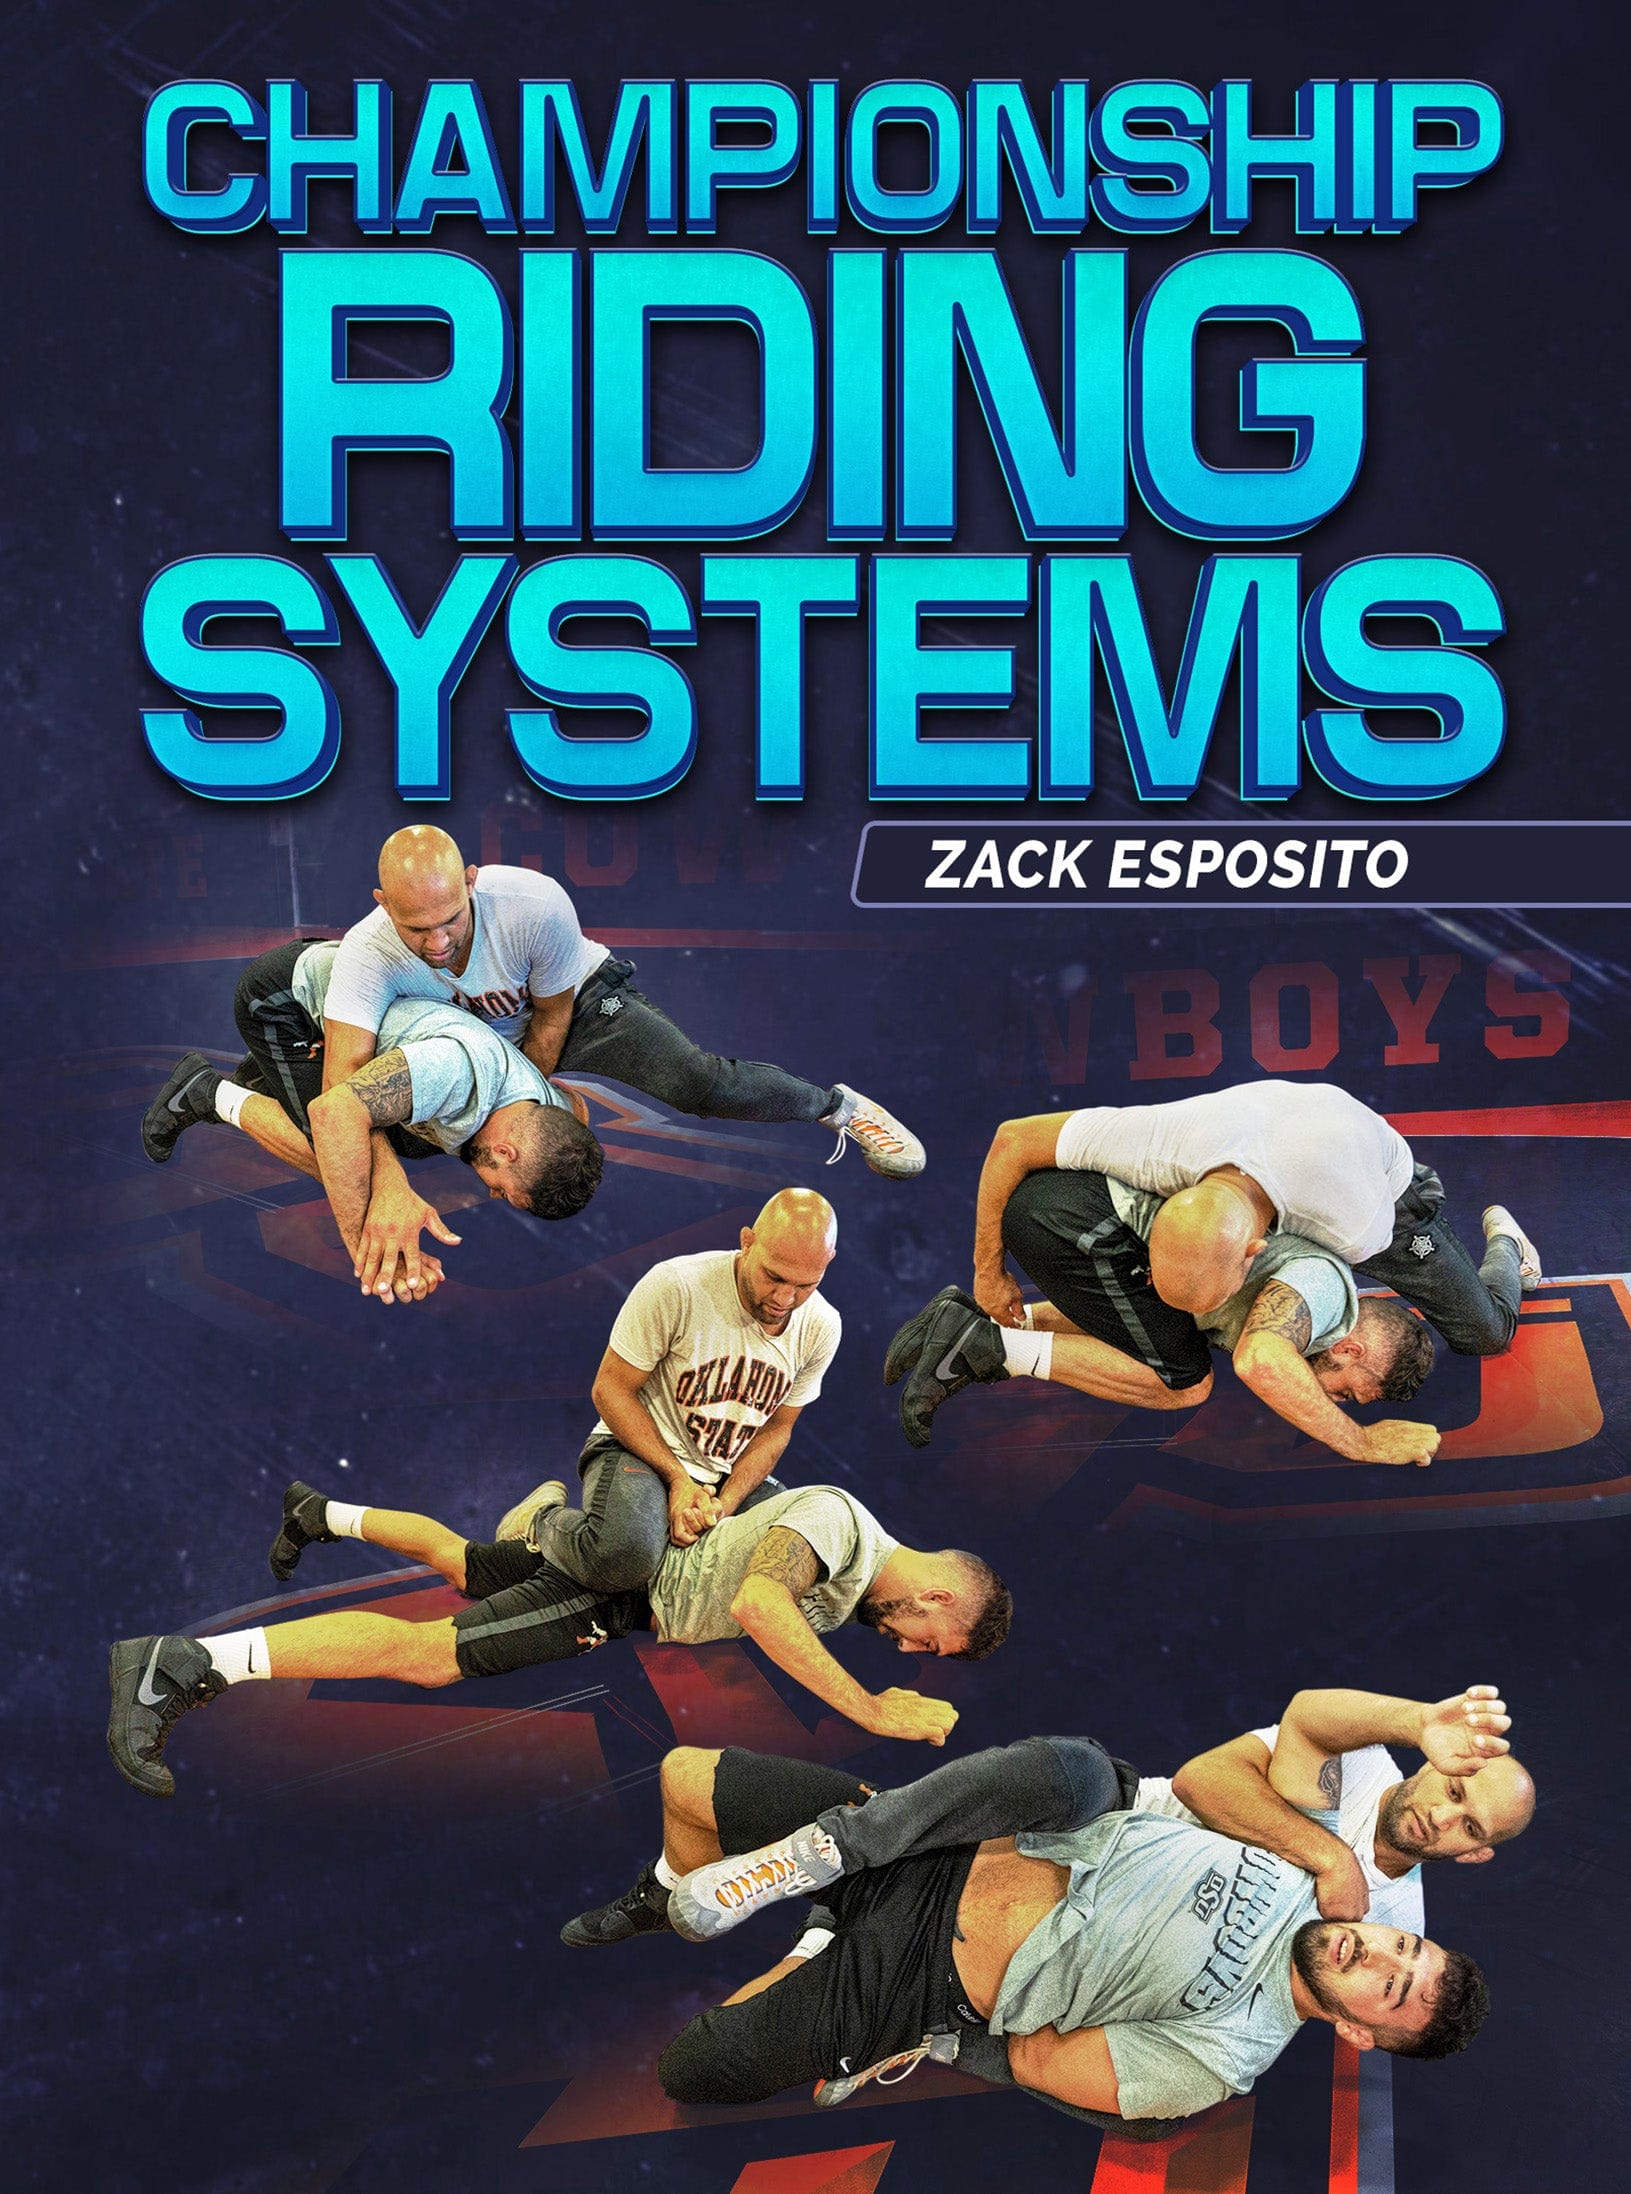 Championship Riding Systems by Zack Esposito - Fanatic Wrestling